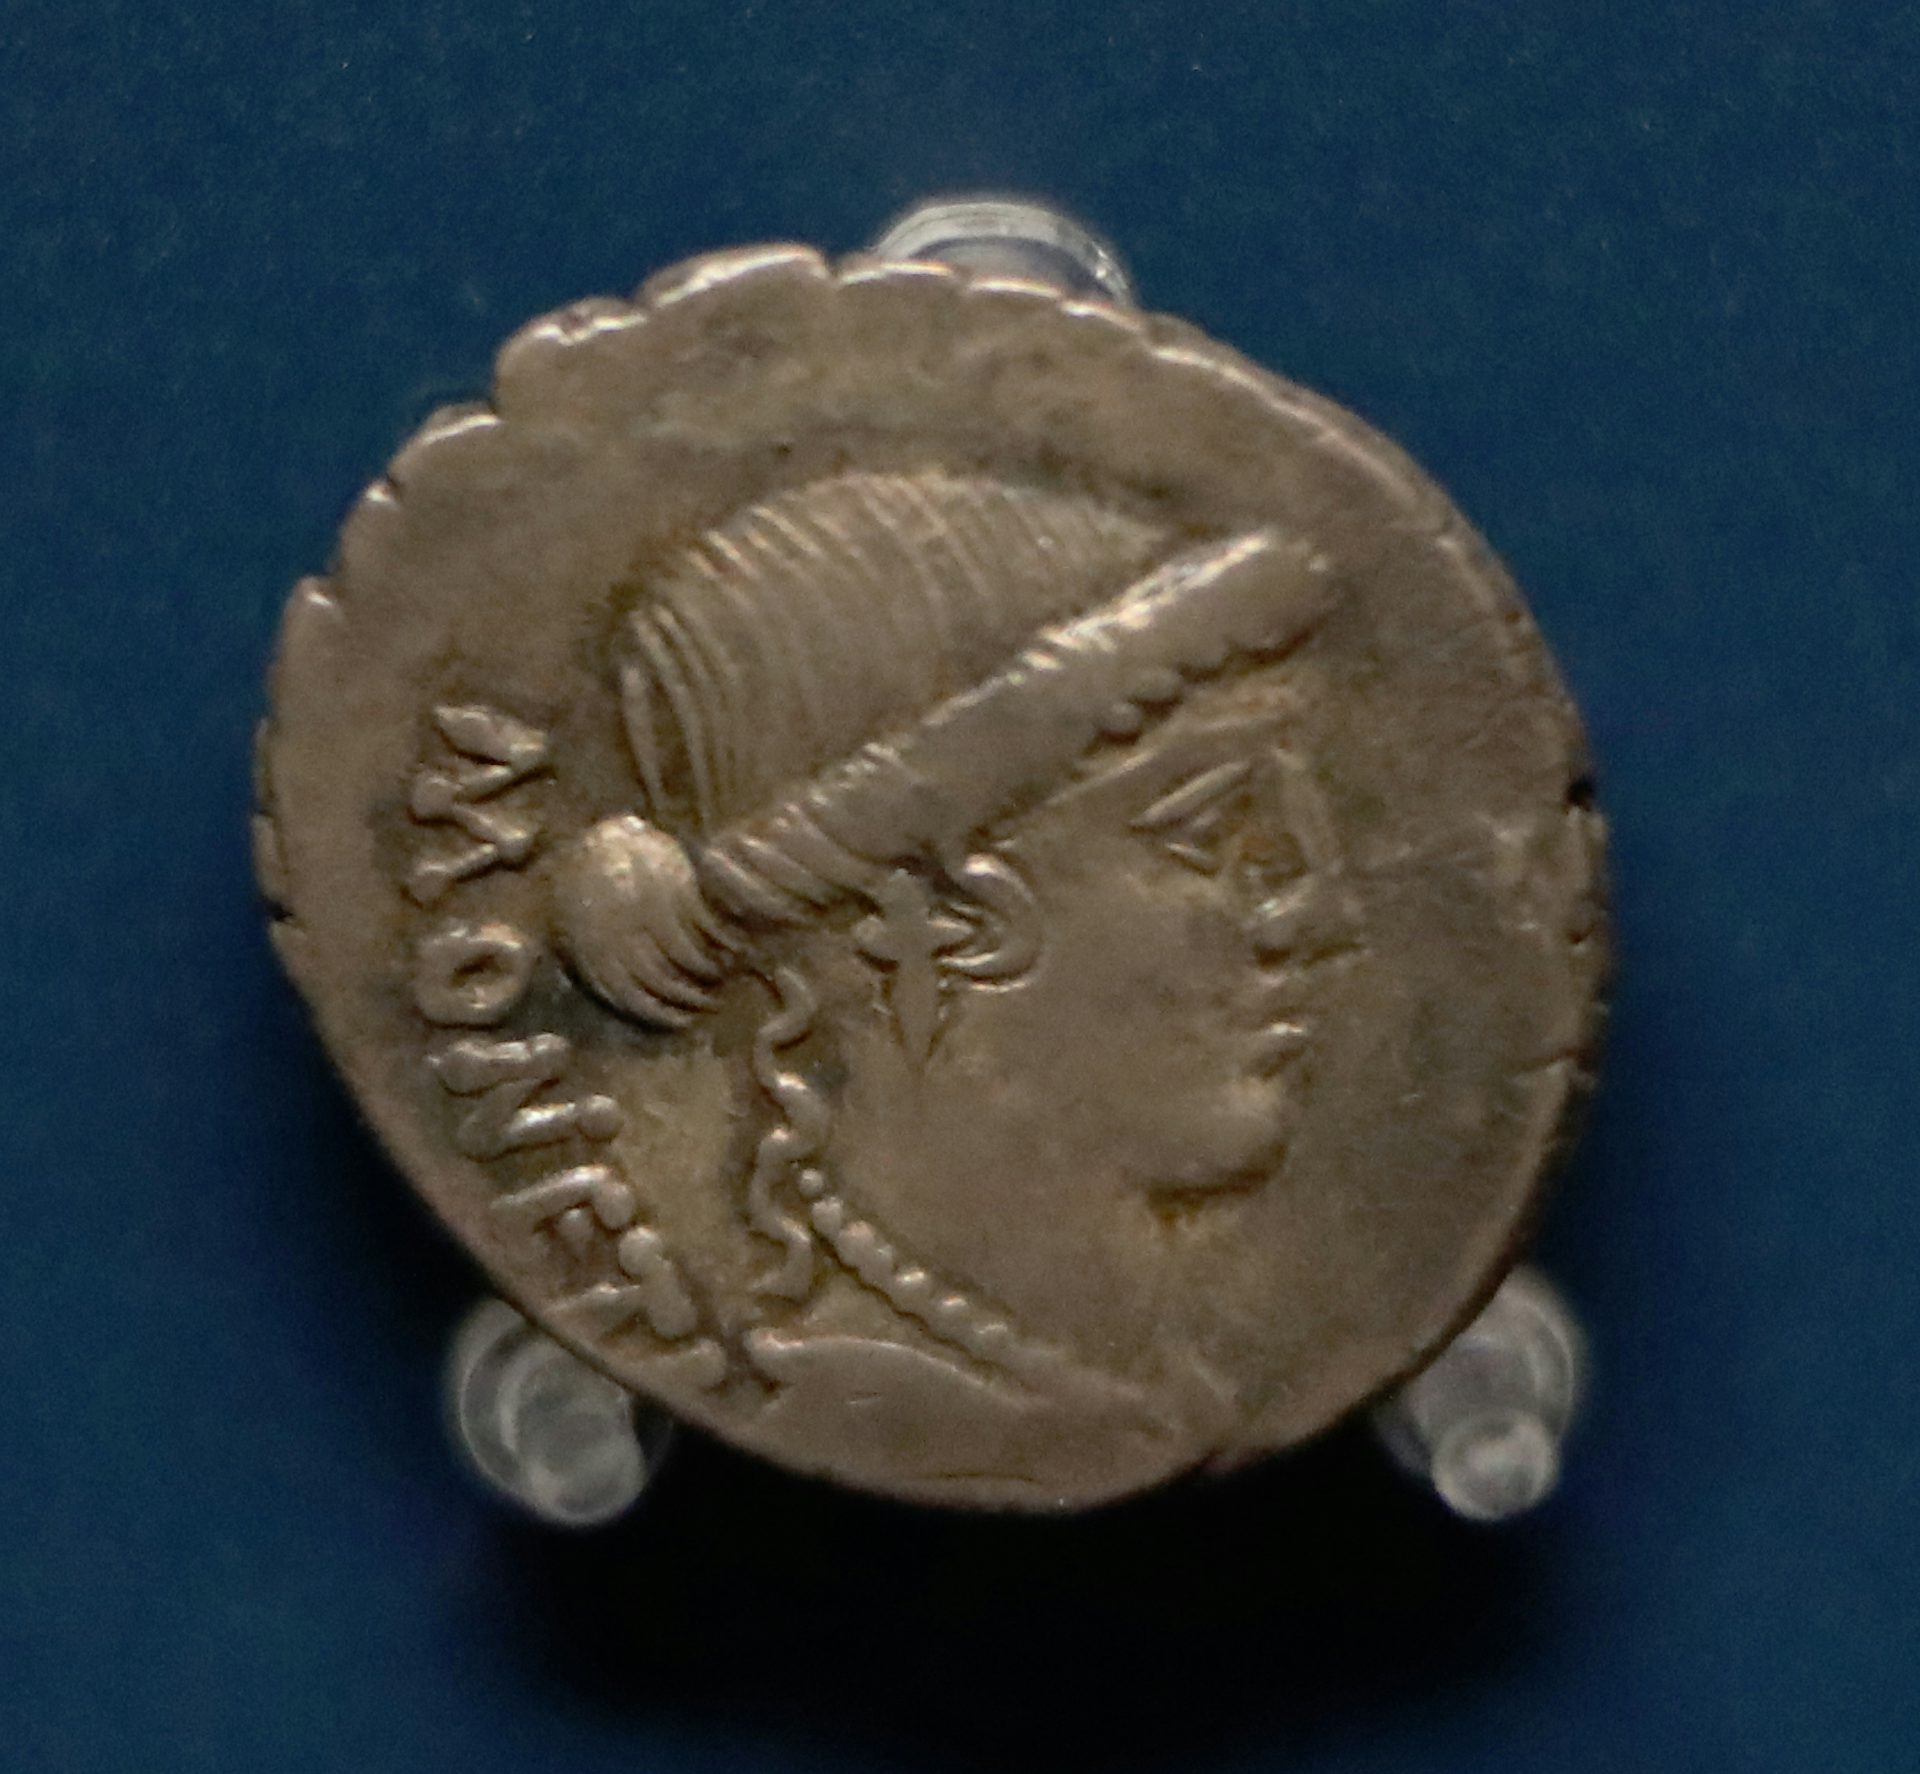 Obverse of a Roman denarius showing Juno Moneta